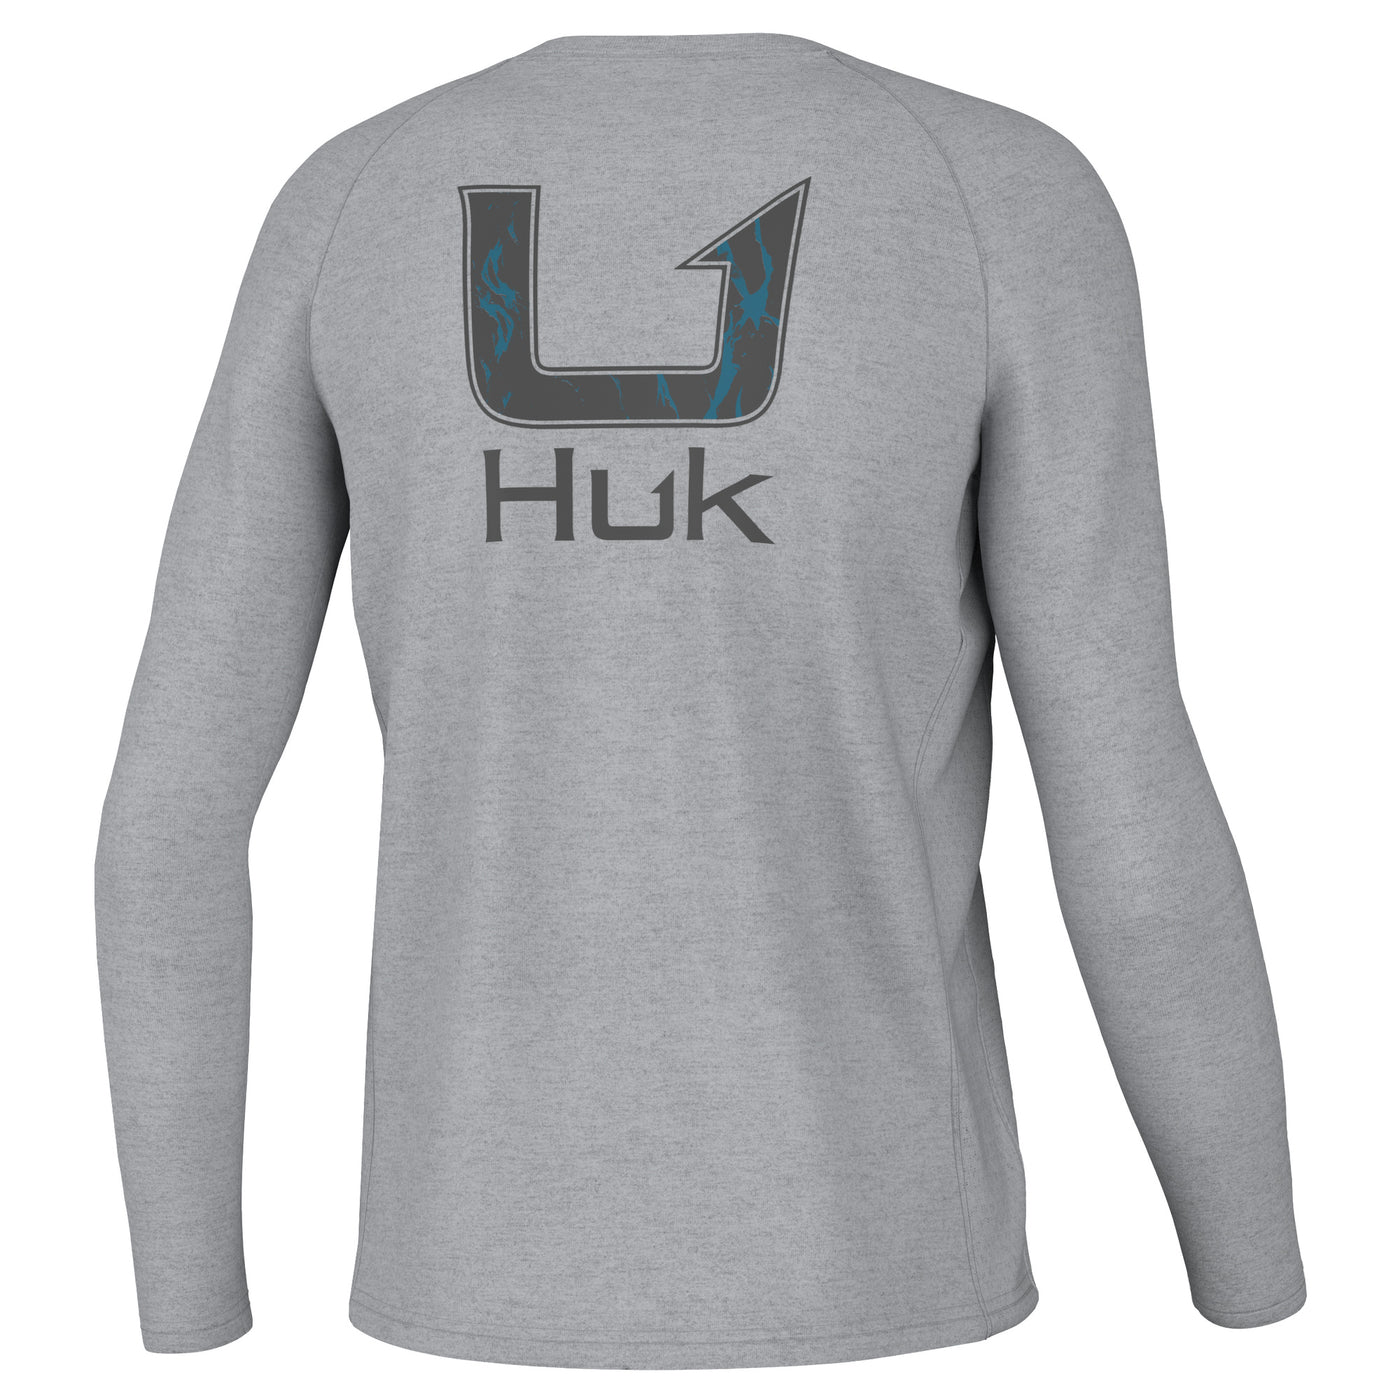 Huk Kids Pursuit Performance Shirt – Huk Gear